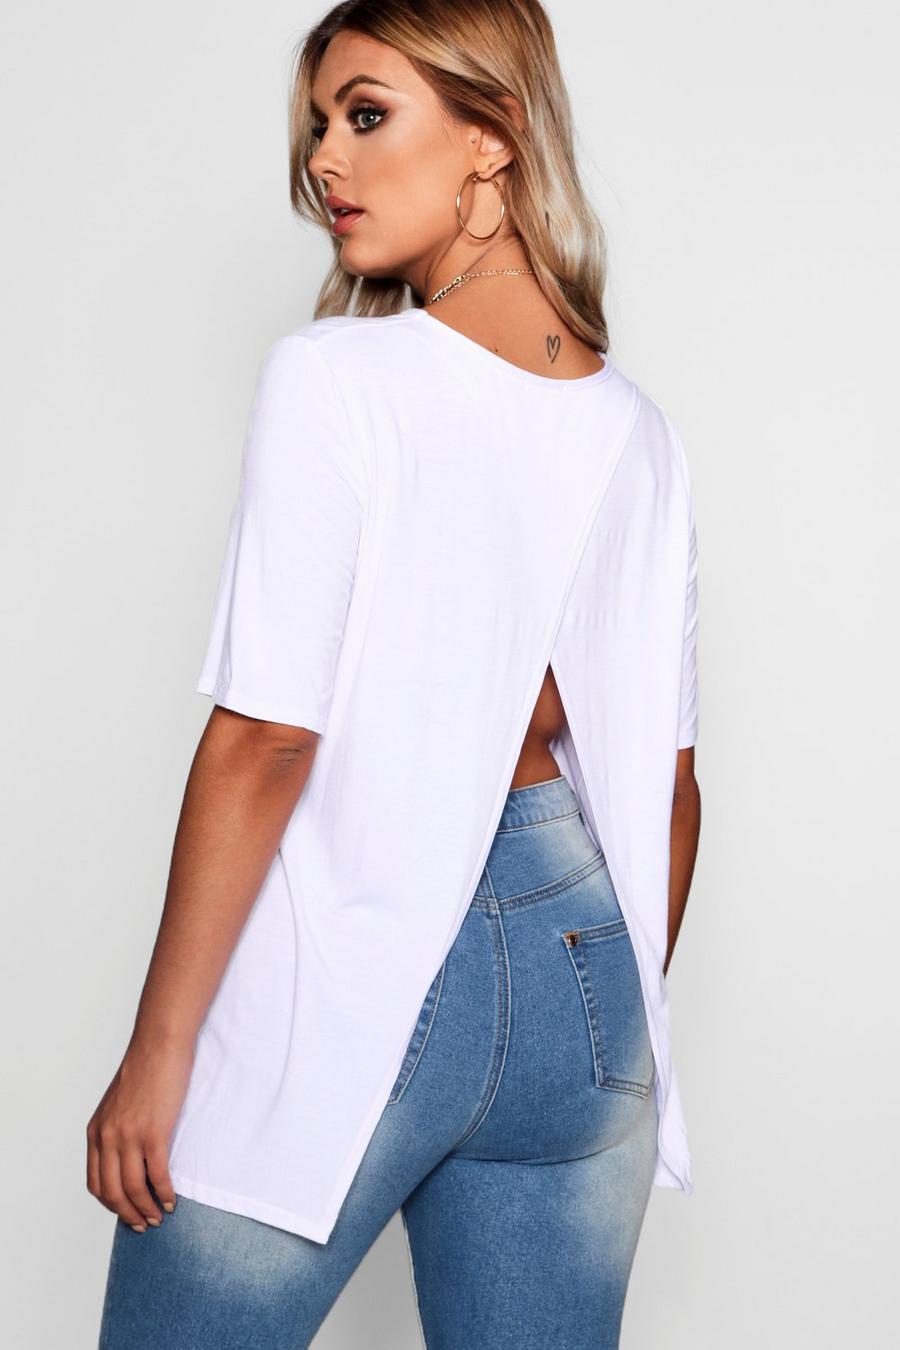 polo-shirts men key-chains clothing pouches Trunks - Boohoo UK - Women's White Plus Split Back T Shirt